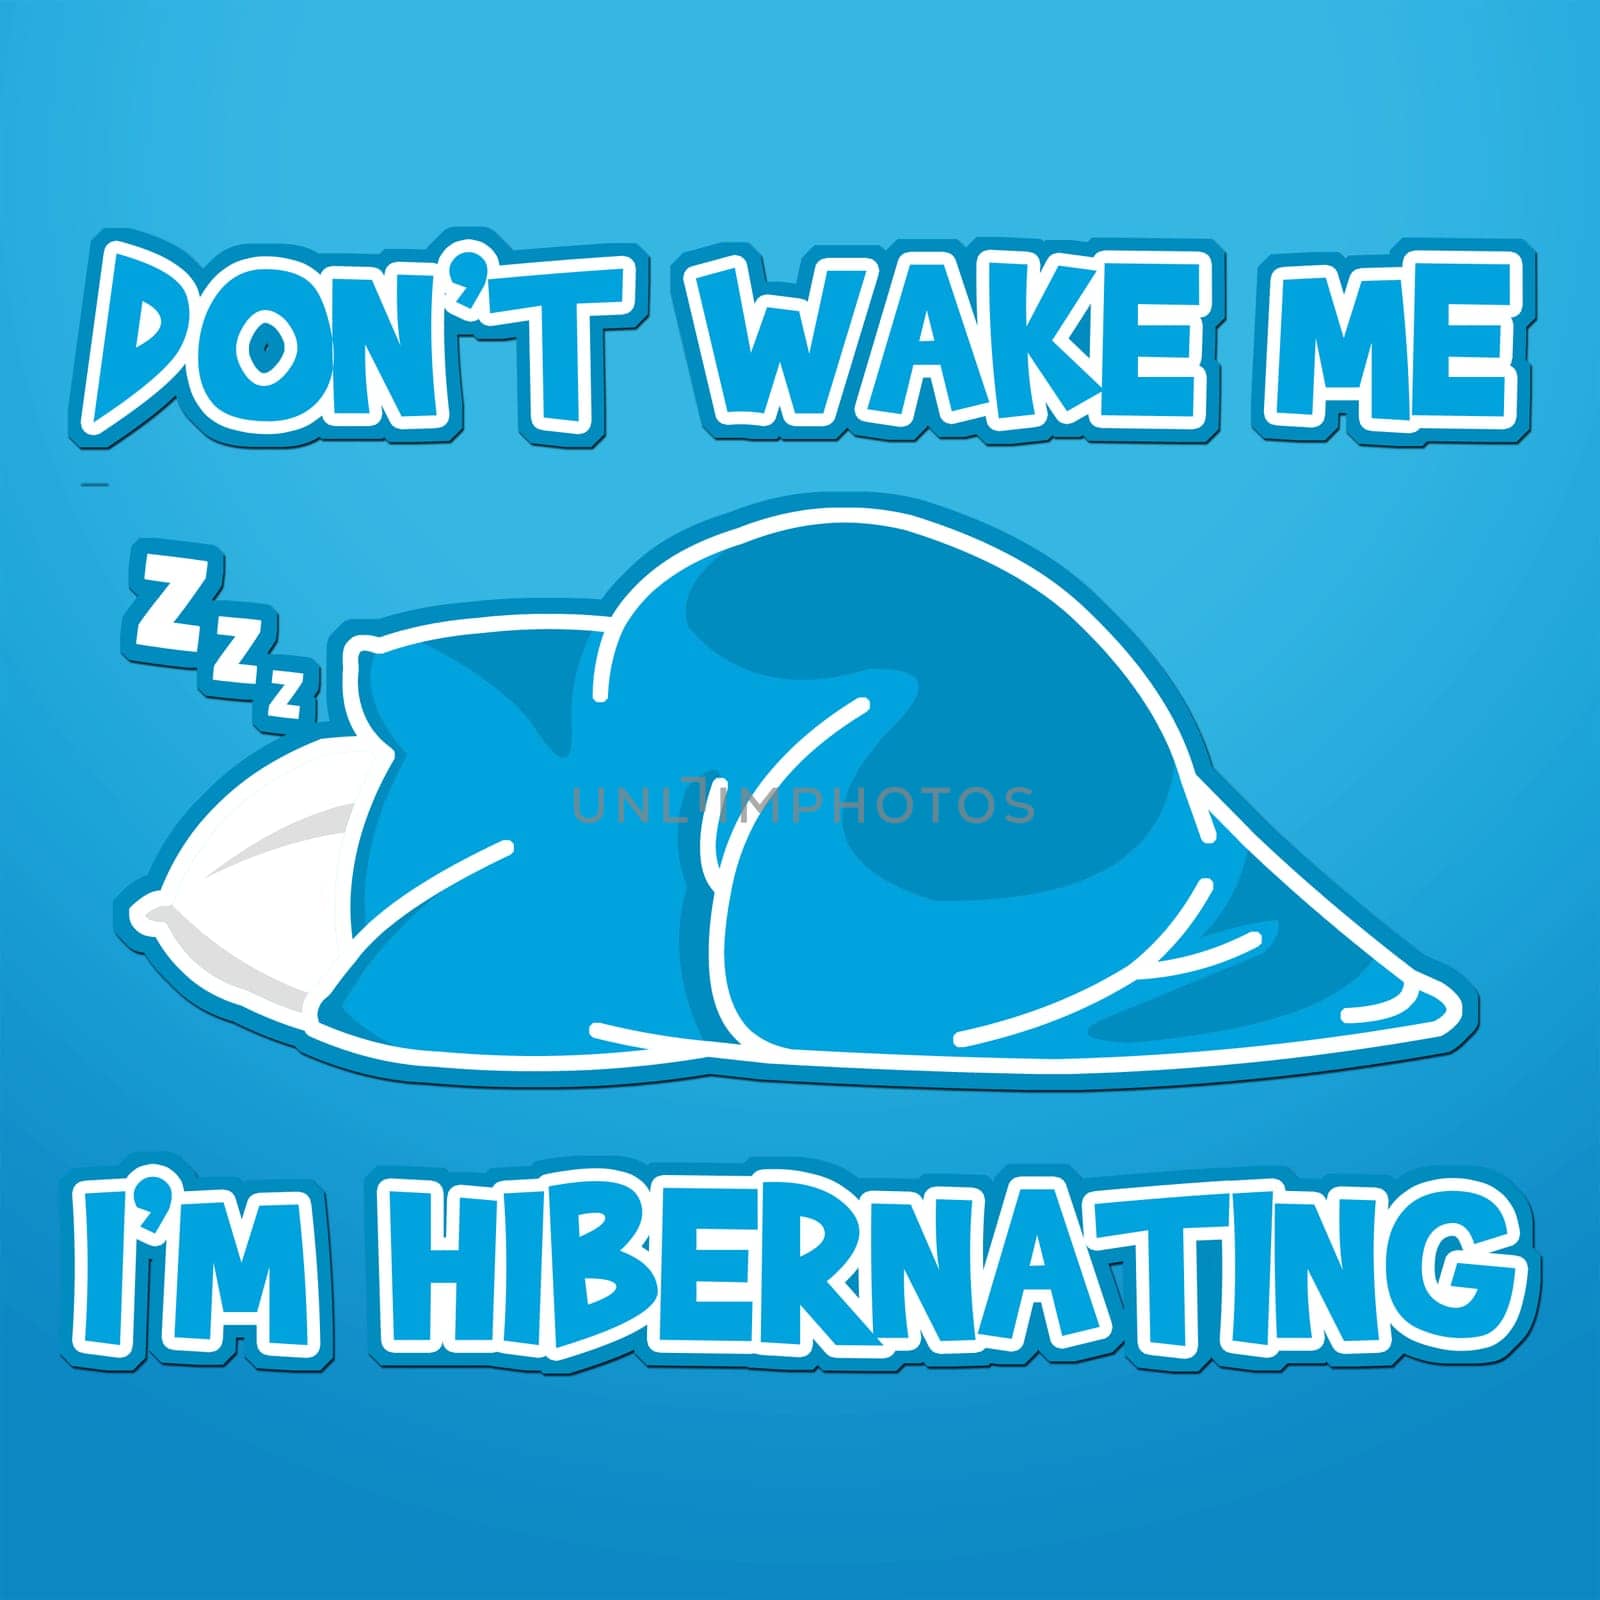 Don't wake me I'm hibernating by Bigalbaloo